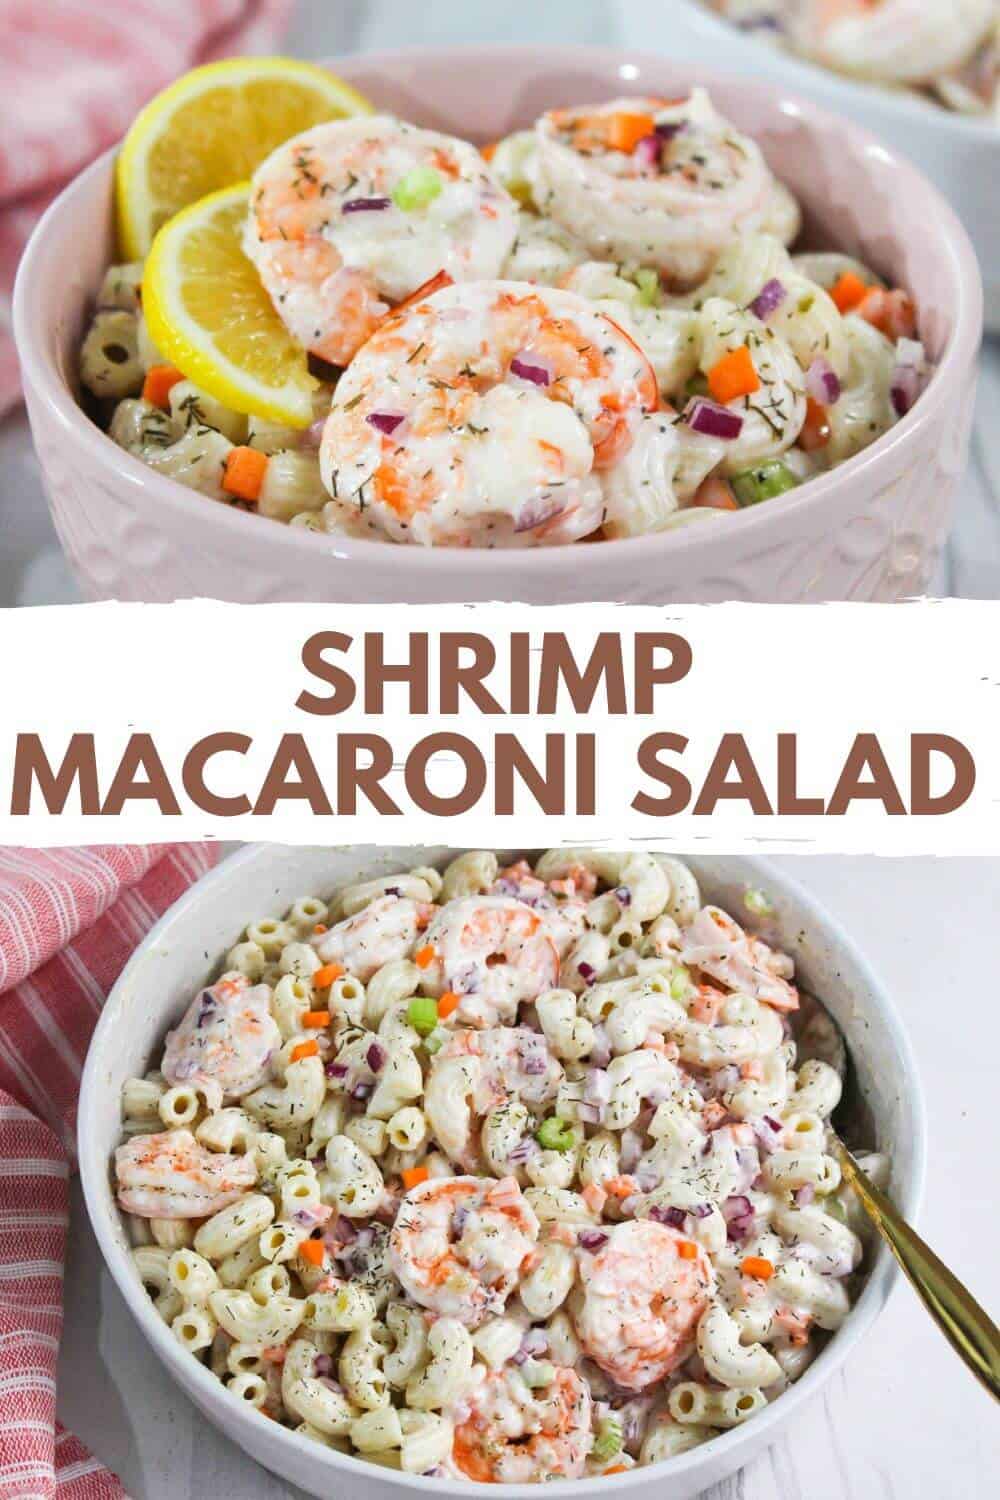 Shrimp macaroni salad in a bowl.